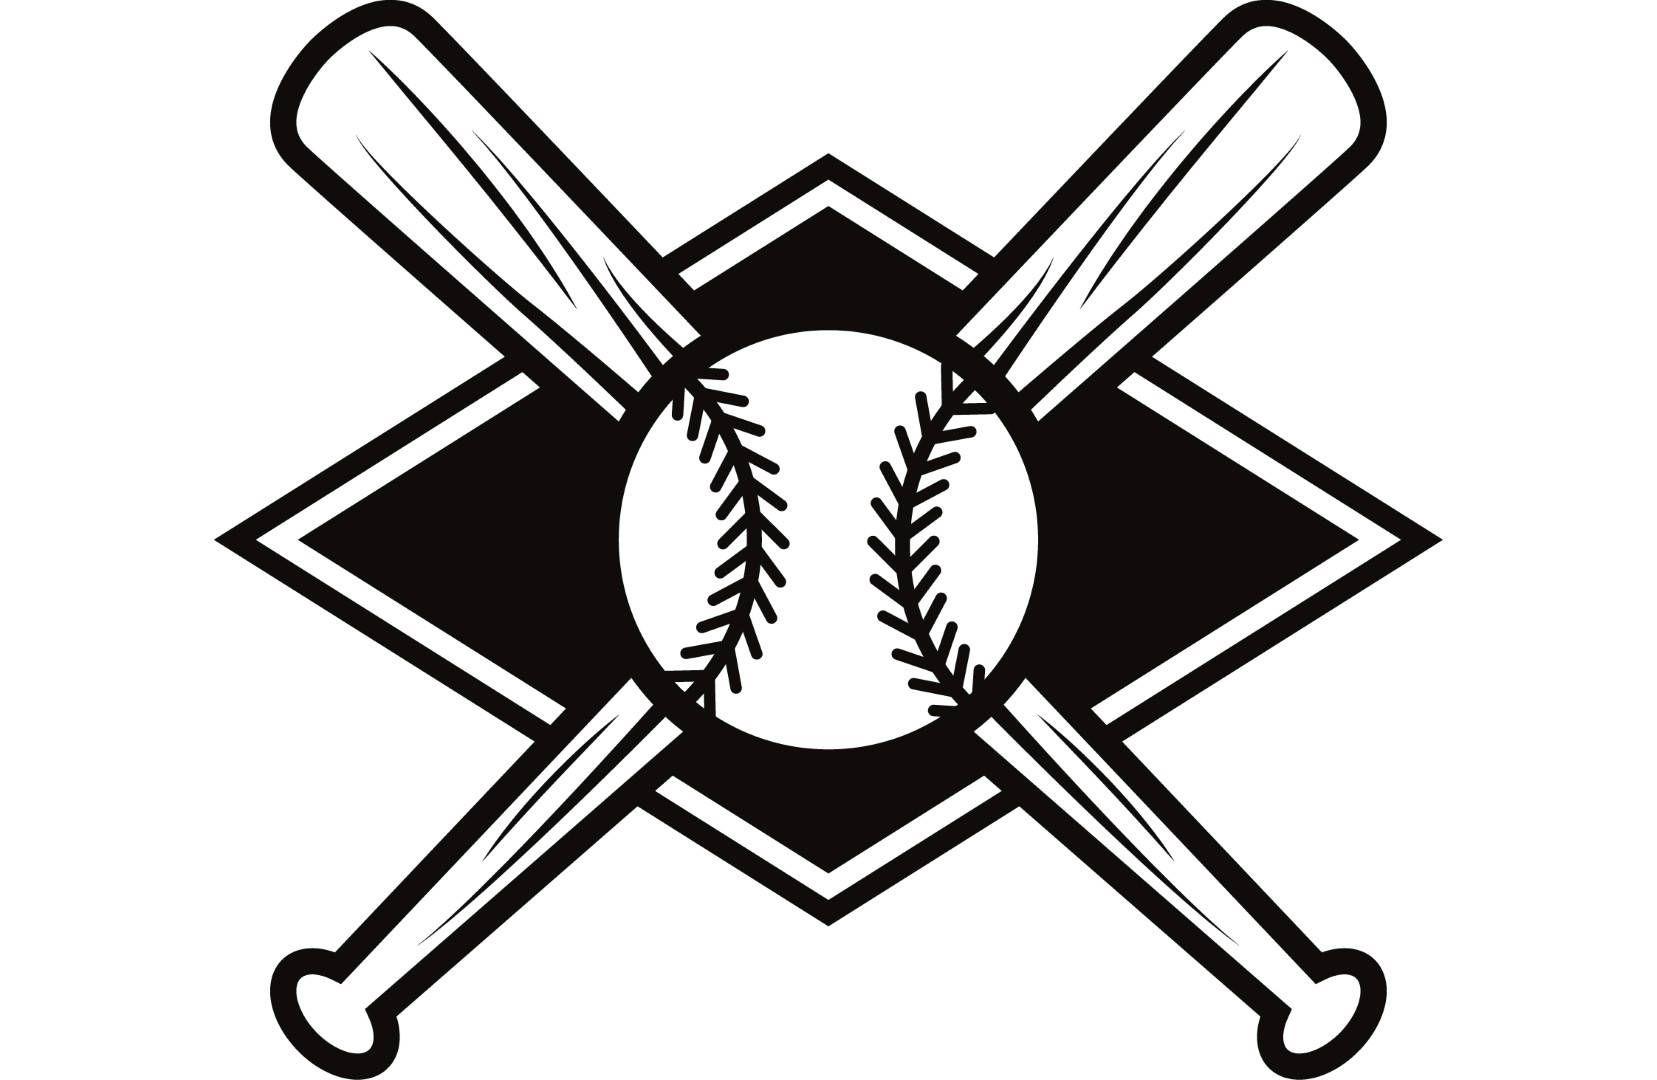 Bat Sports Logo - Baseball Logo 7 Bats Crossed Ball Diamond League Equipment